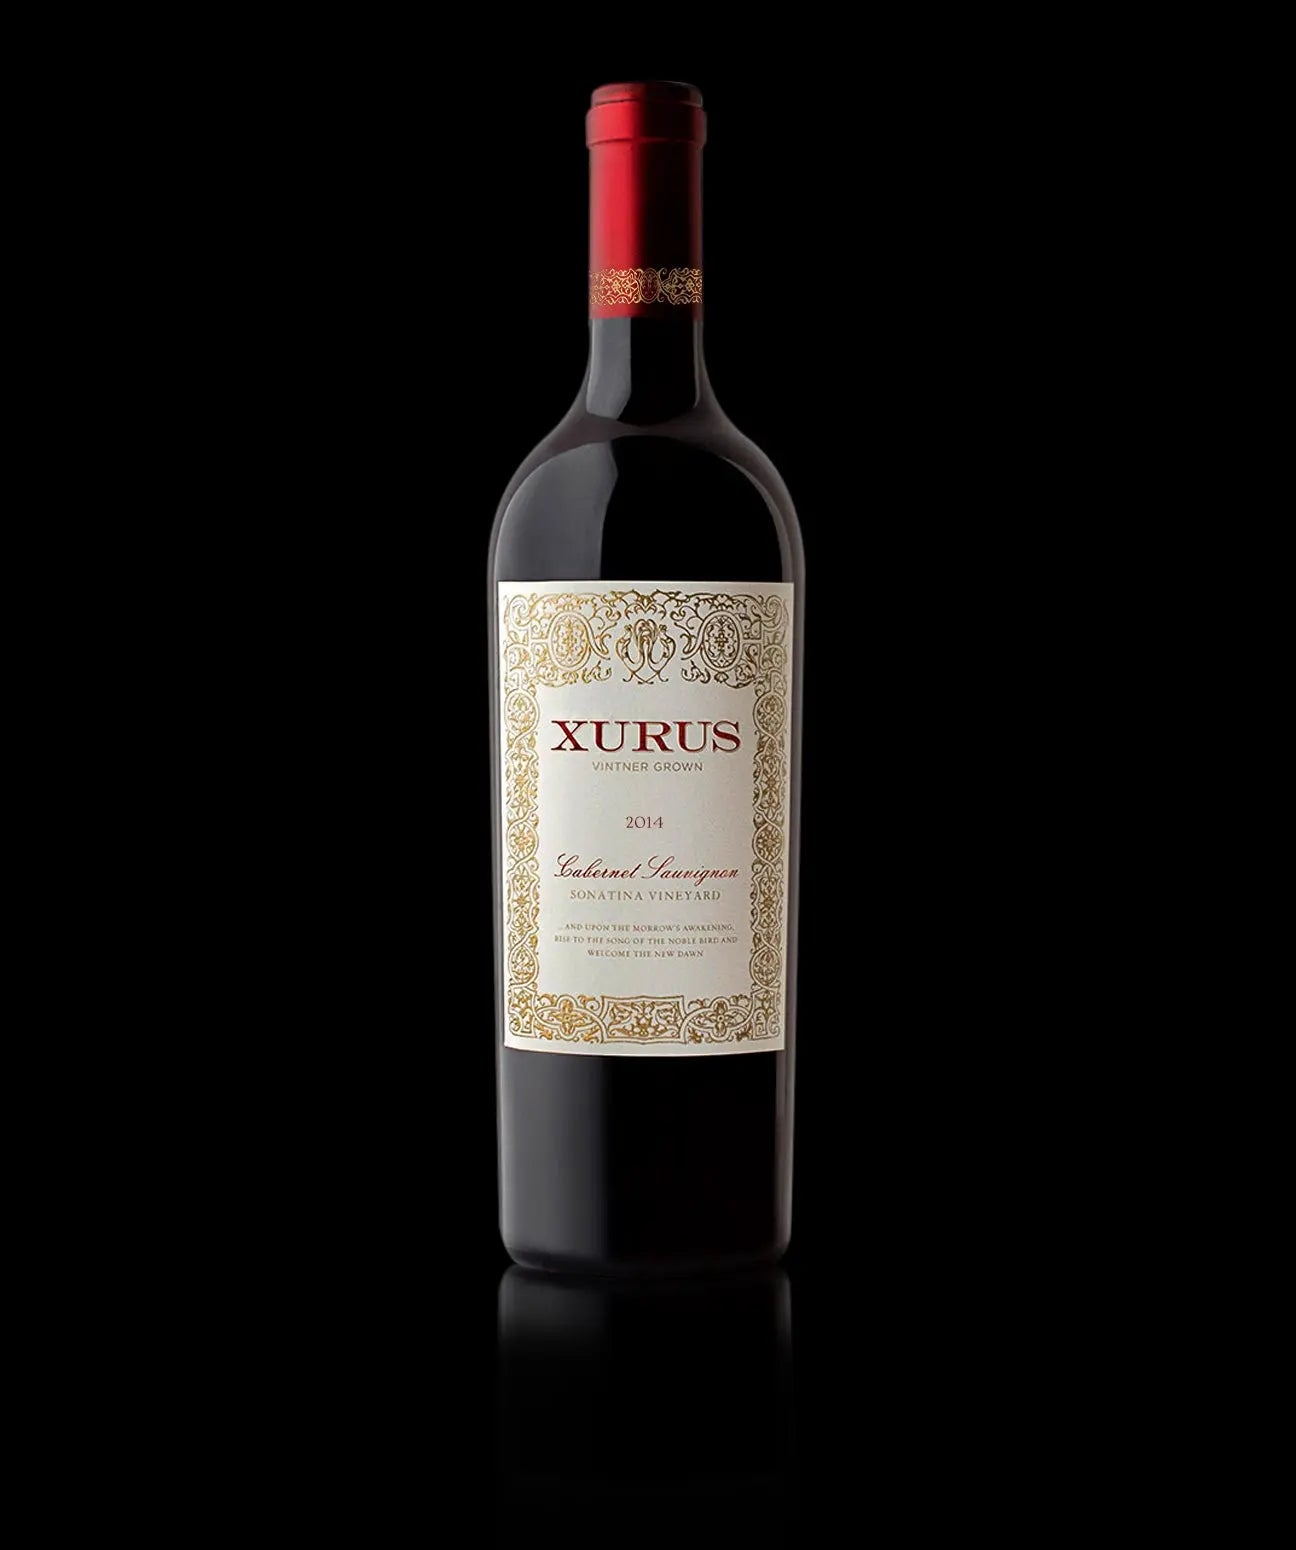 Image of a Xurus Cabernet Sauvignon 2014 bottle.